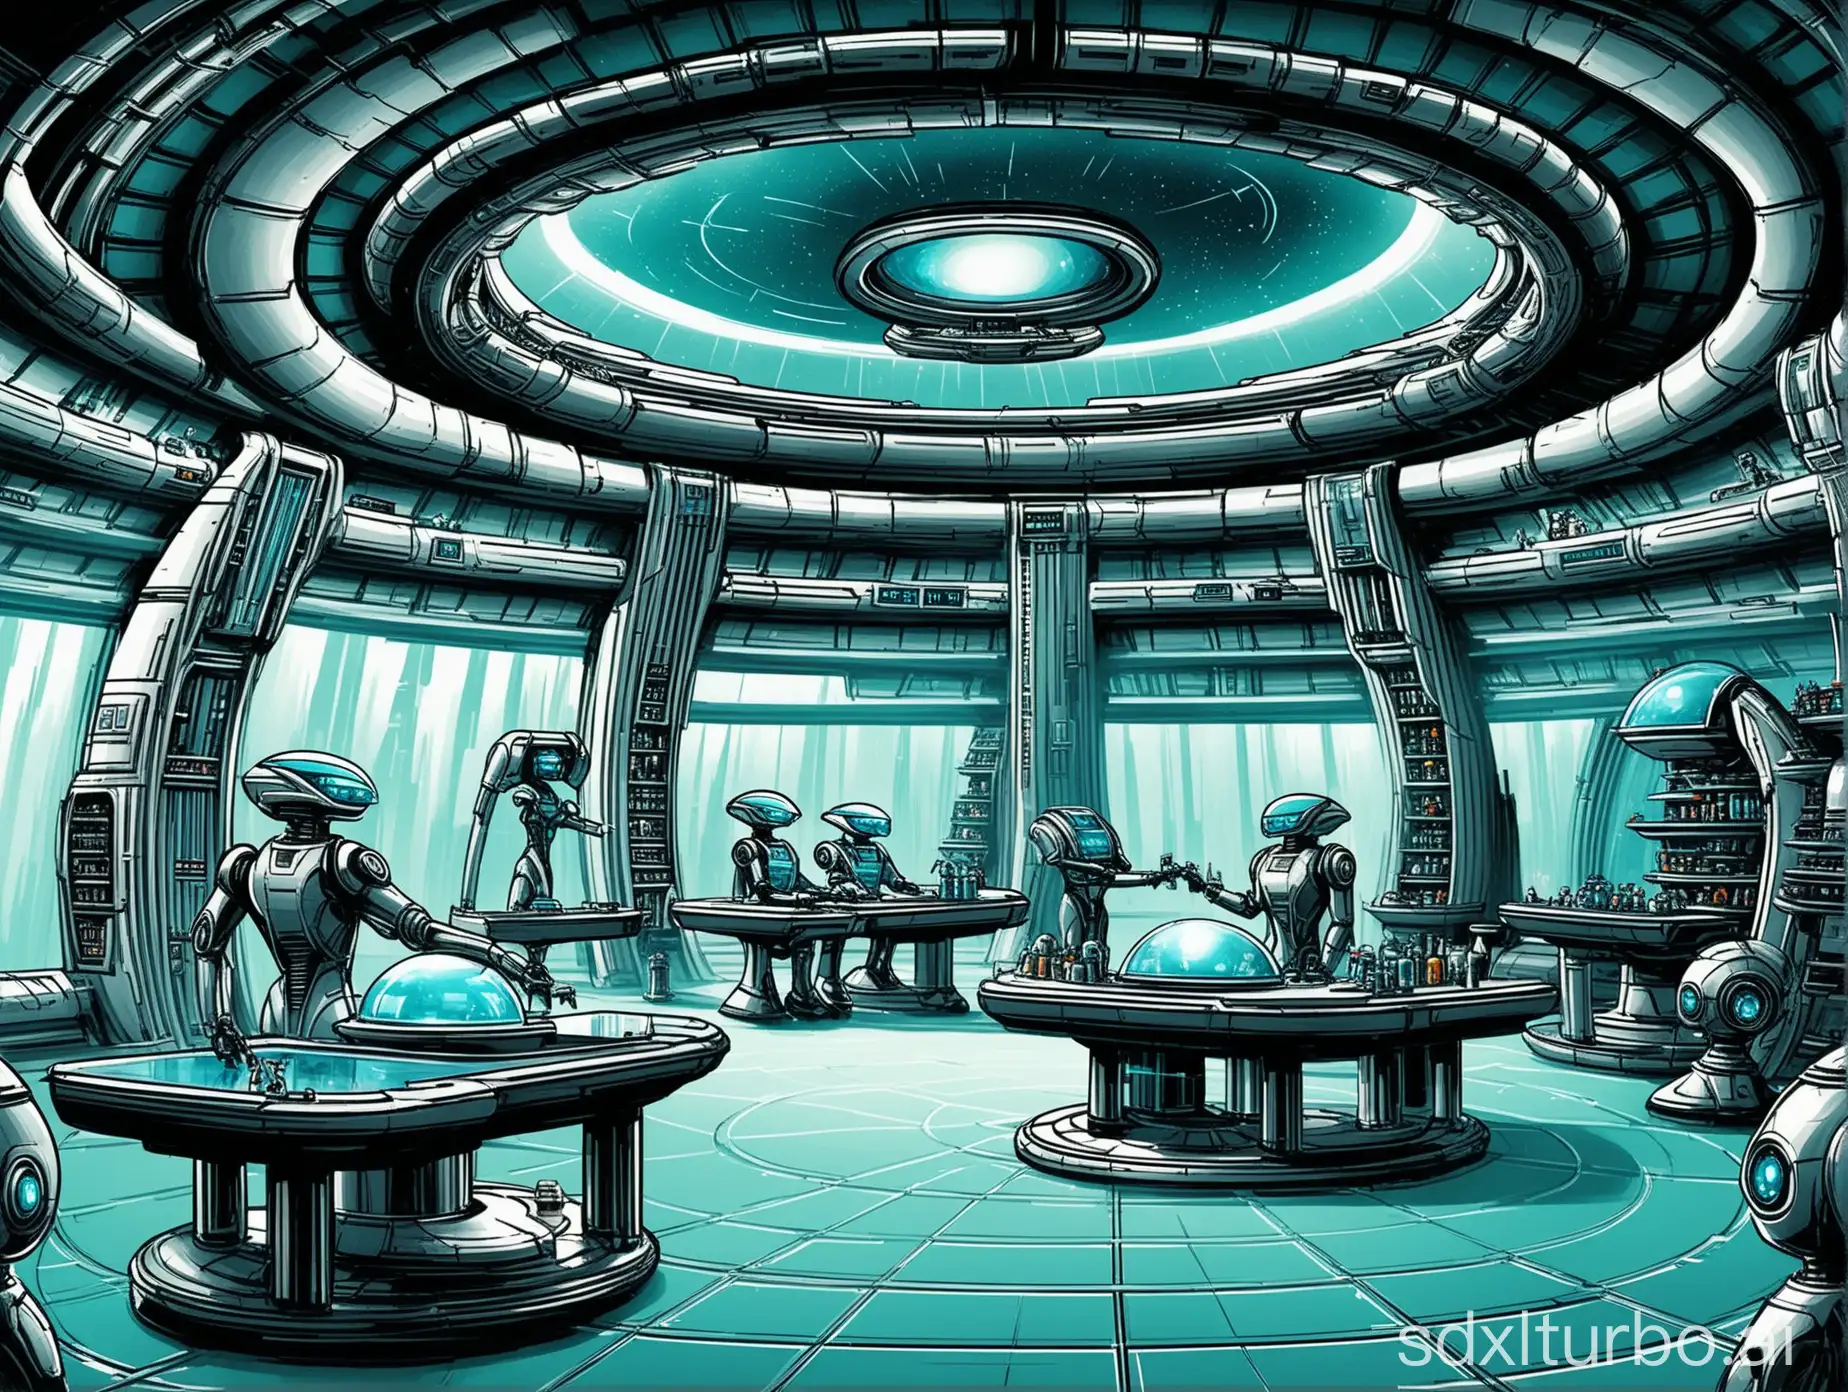 perry rhodan style futuristic laboratory with robots